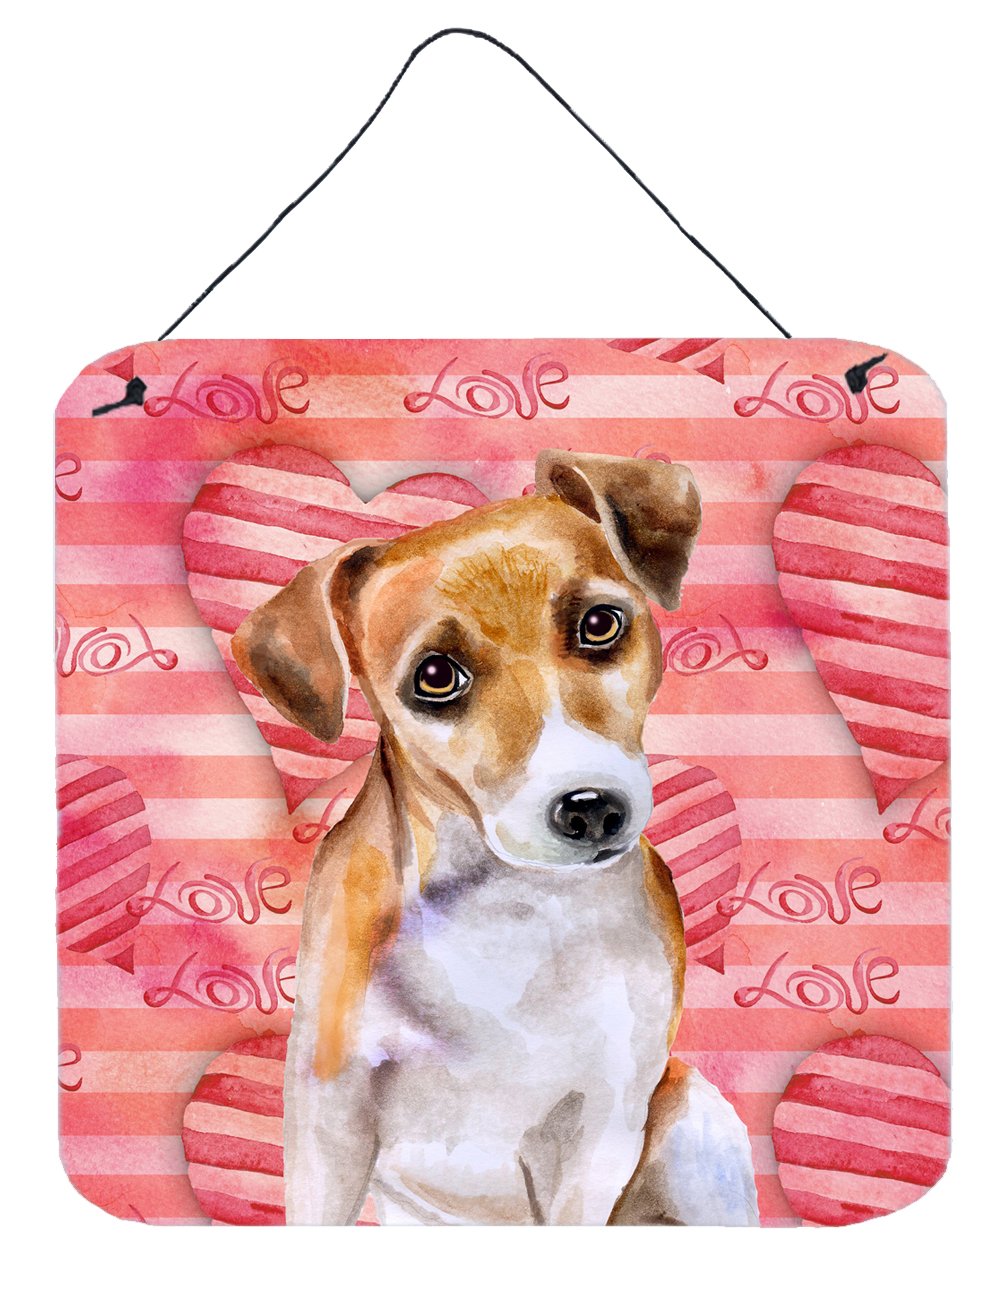 Jack Russell Terrier #2 Love Wall or Door Hanging Prints BB9800DS66 by Caroline's Treasures